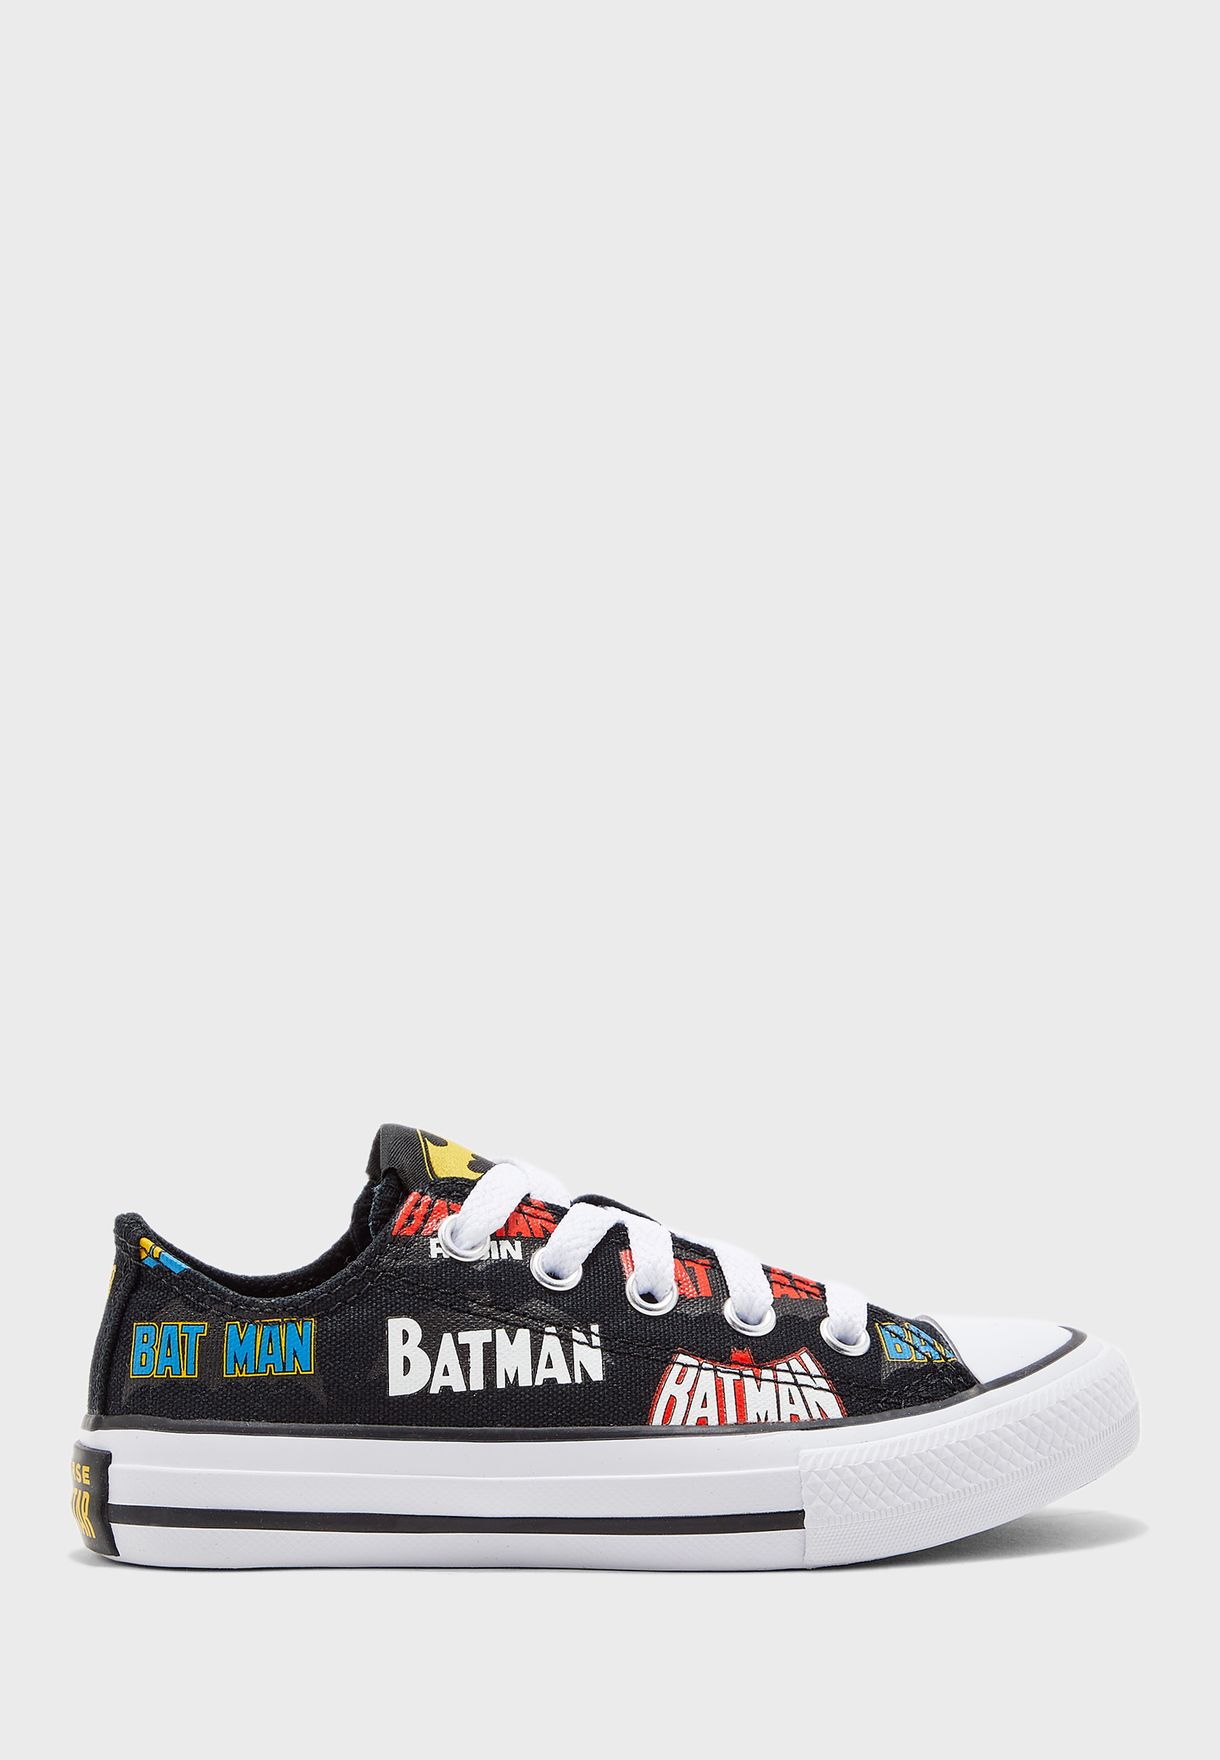 buy batman converse